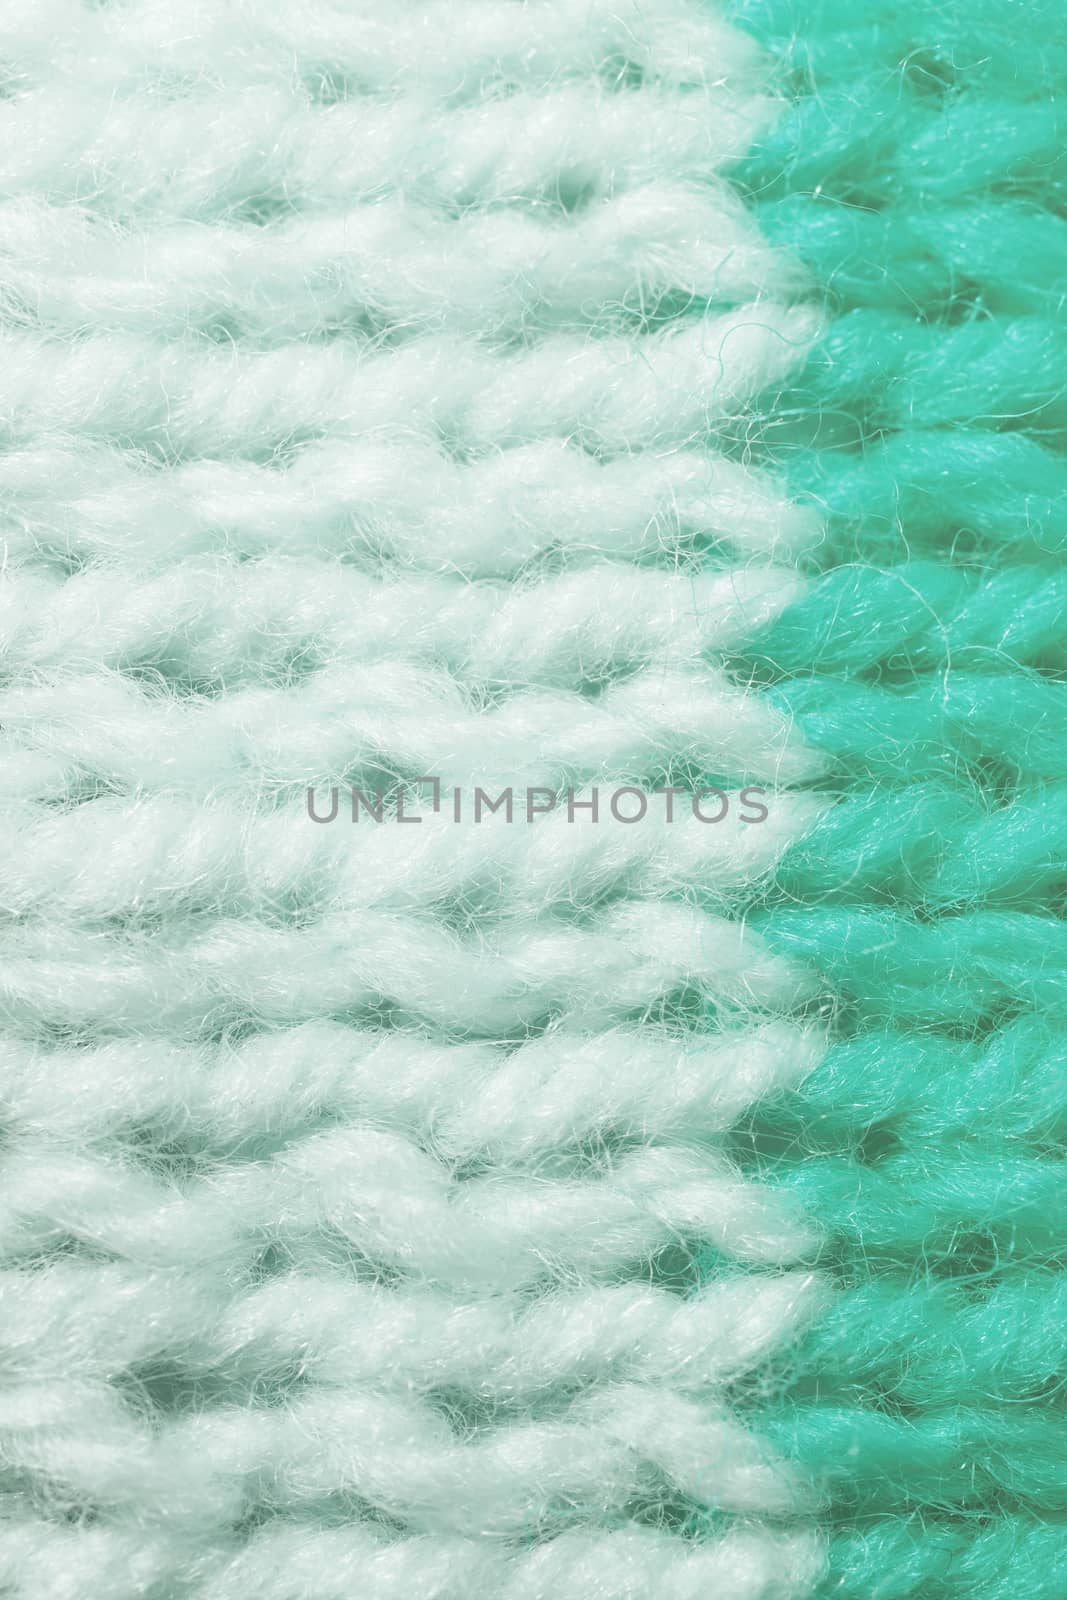 White Turquoise Wool Knitting Texture. Horizontal Along Weaving Crochet Detailed Rows. Sweater Textile Background. Macro Closeup.